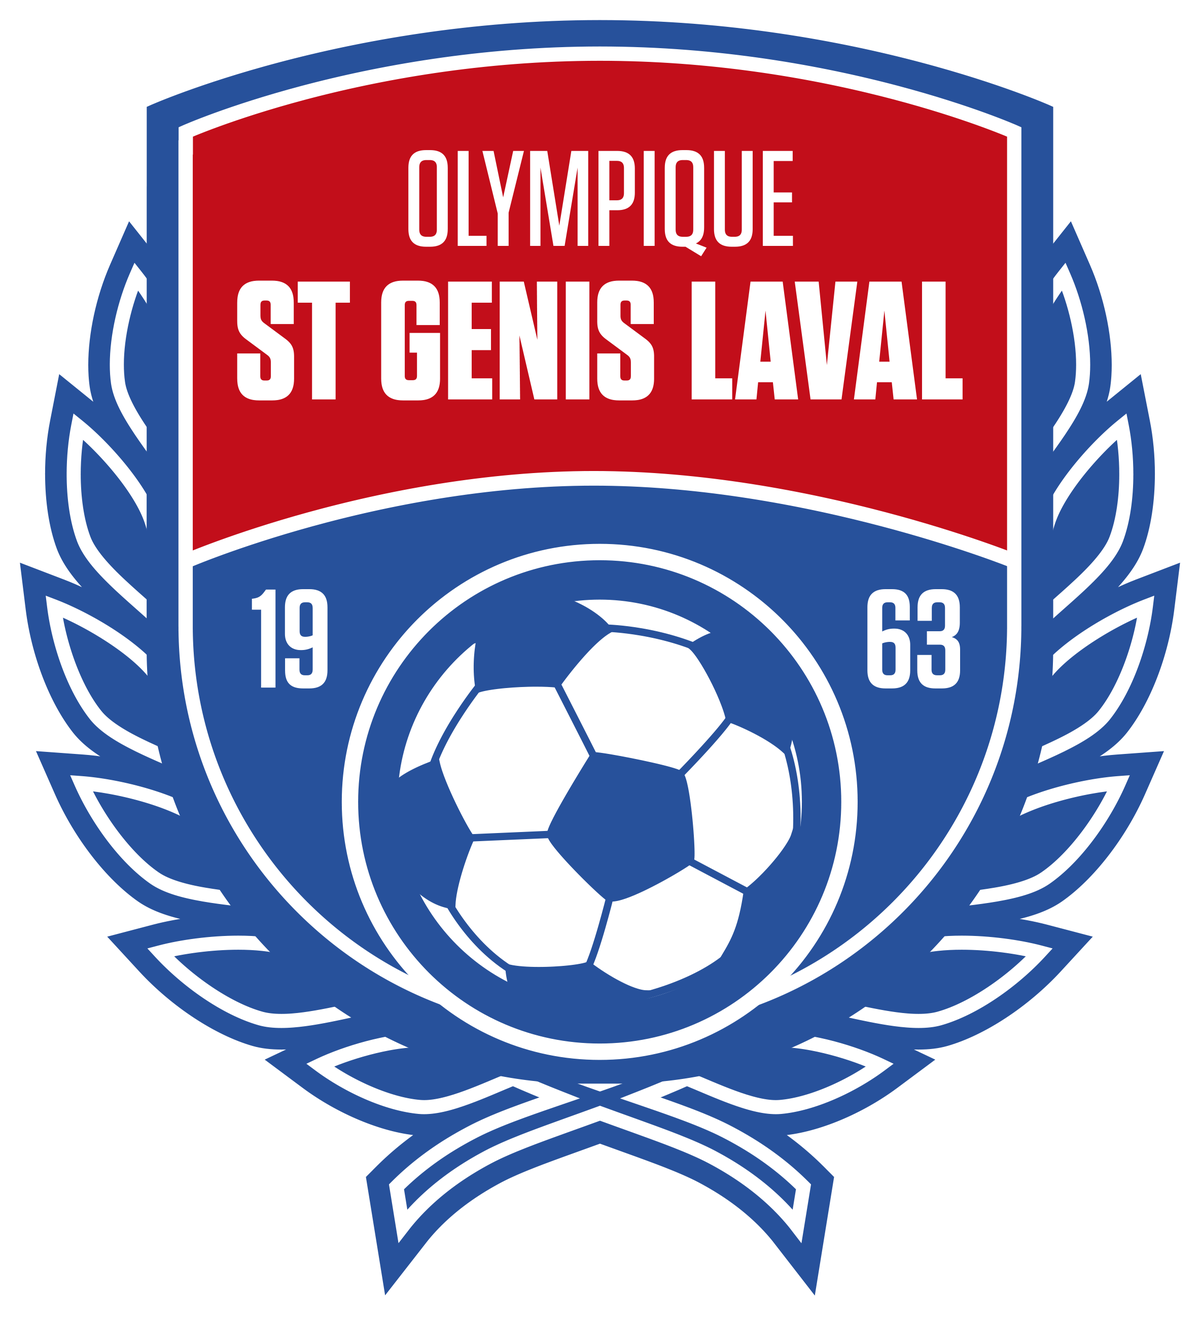 Saint Genis Laval, France - 21 Mai 2020 : Logo Lustucru Sur Un